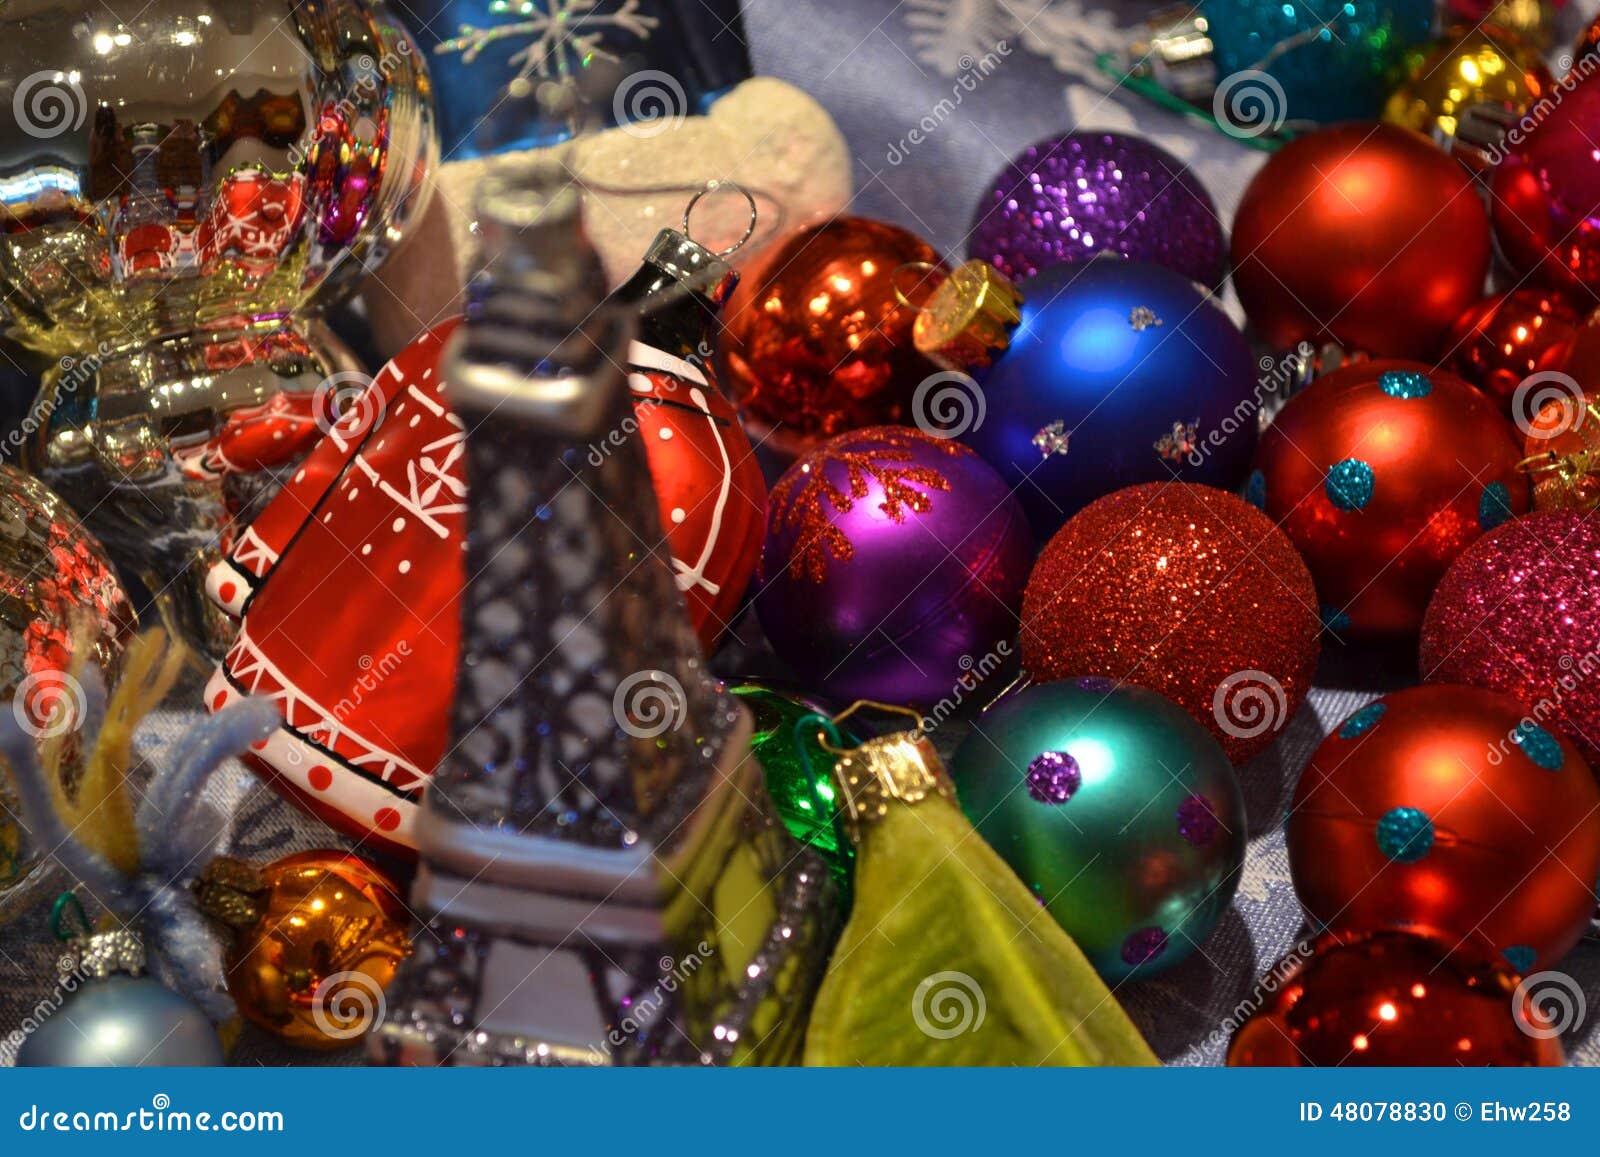 Christmas Ornaments stock photo. Image of ornaments, balls - 48078830